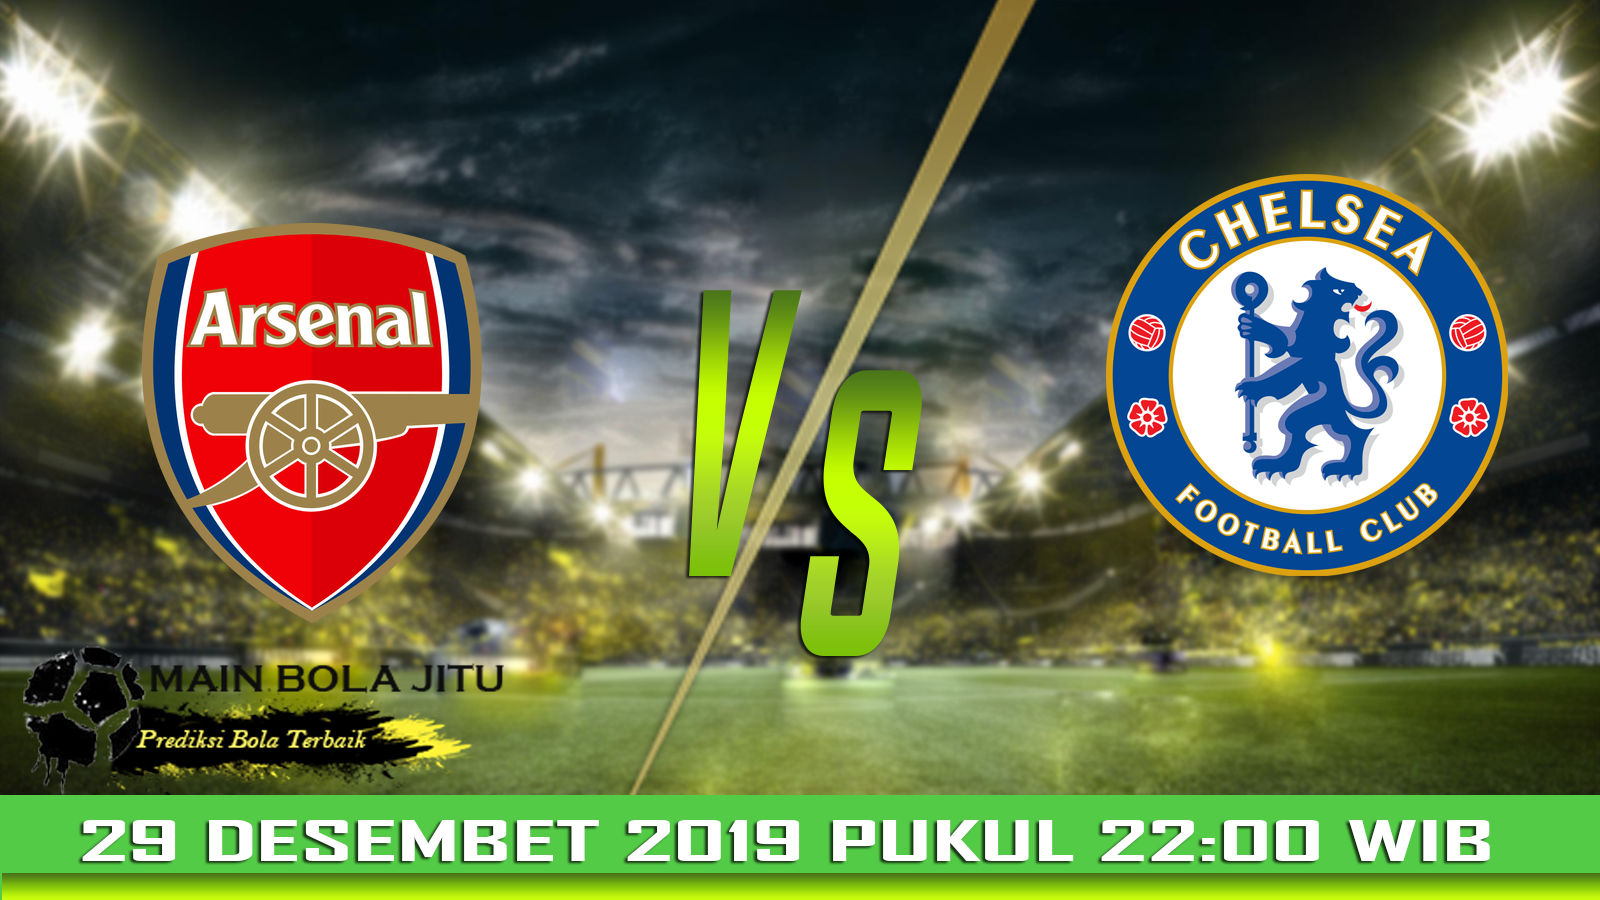 Prediksi Skor Arsenal vs Chelsea tanggal 29-12-2019